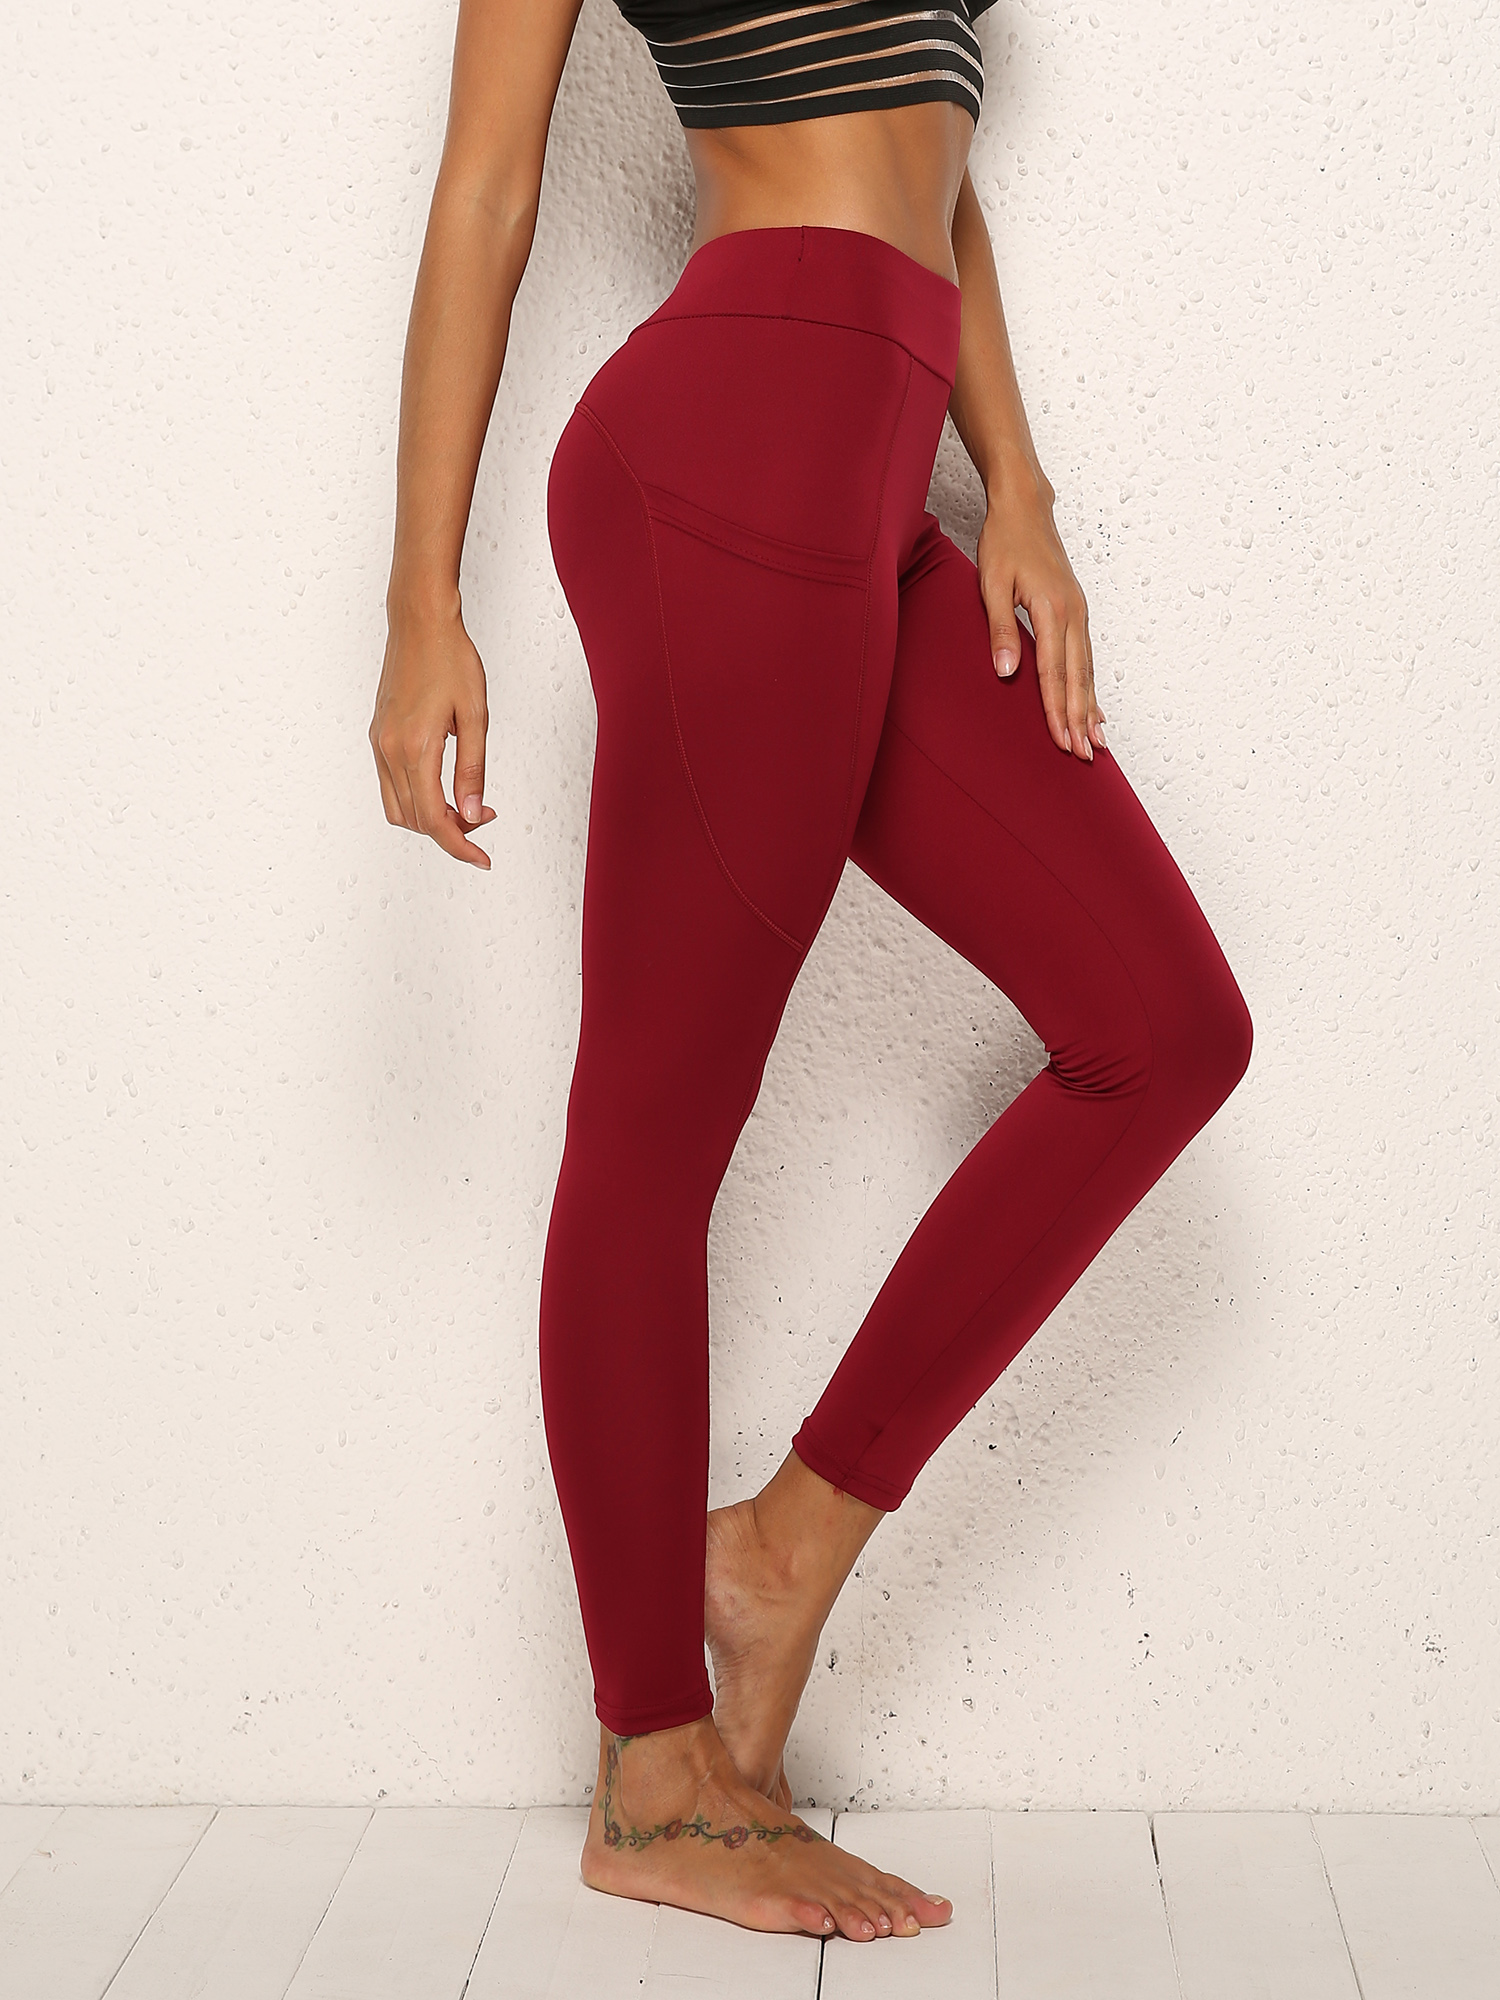  Dark Red Plain Butt Lift Yoga Pants for Women Seamless